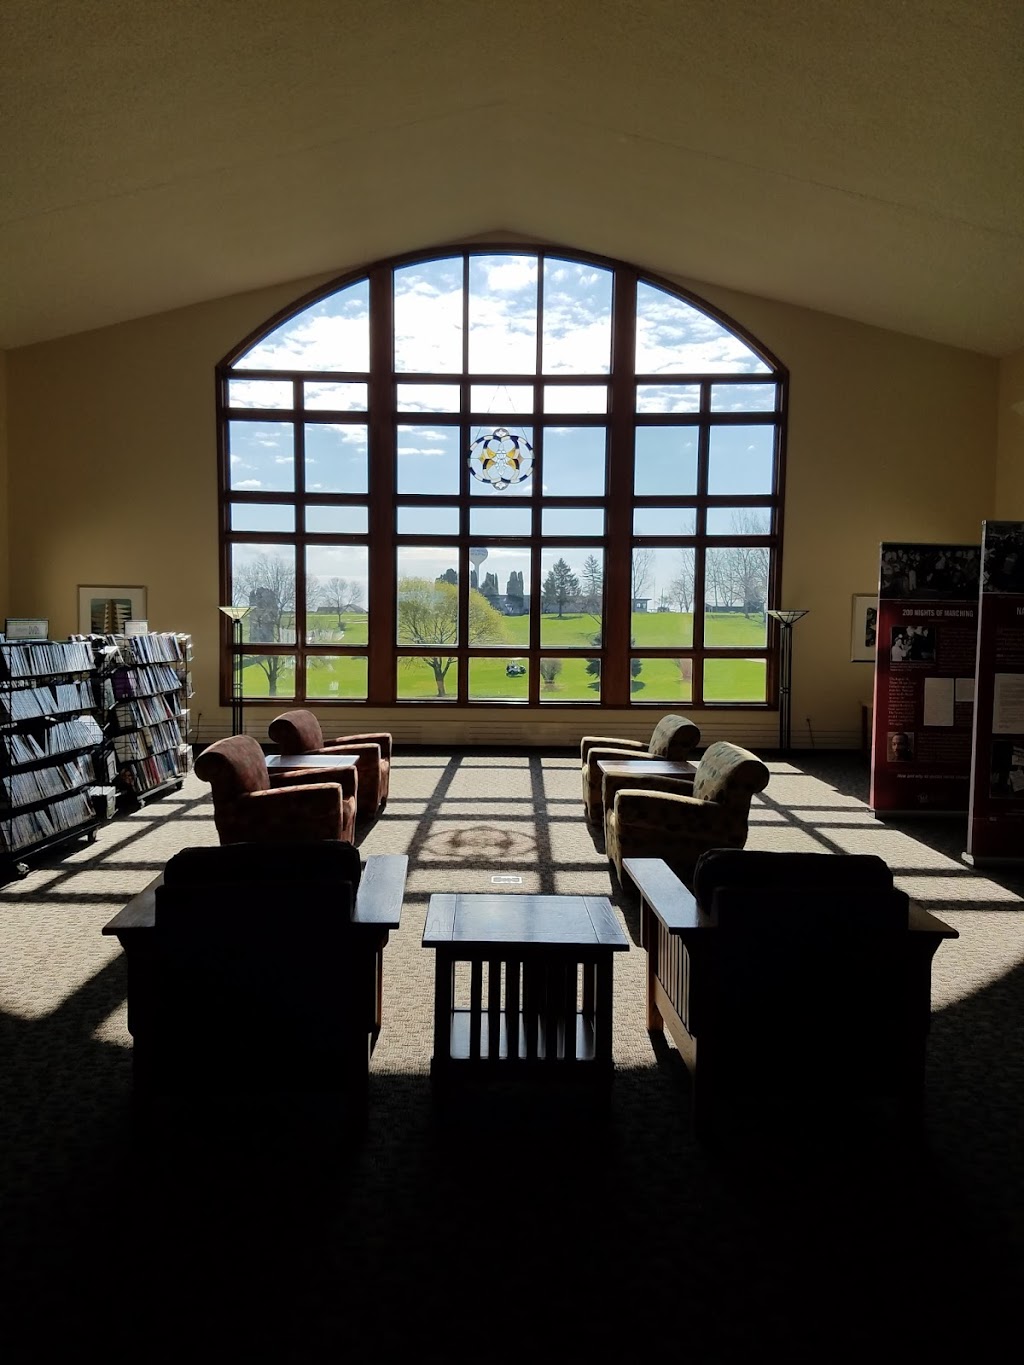 Mount Horeb Public Library | Photo 1 of 3 | Address: 105 Perimeter Rd, Mt Horeb, WI 53572, USA | Phone: (608) 437-5021